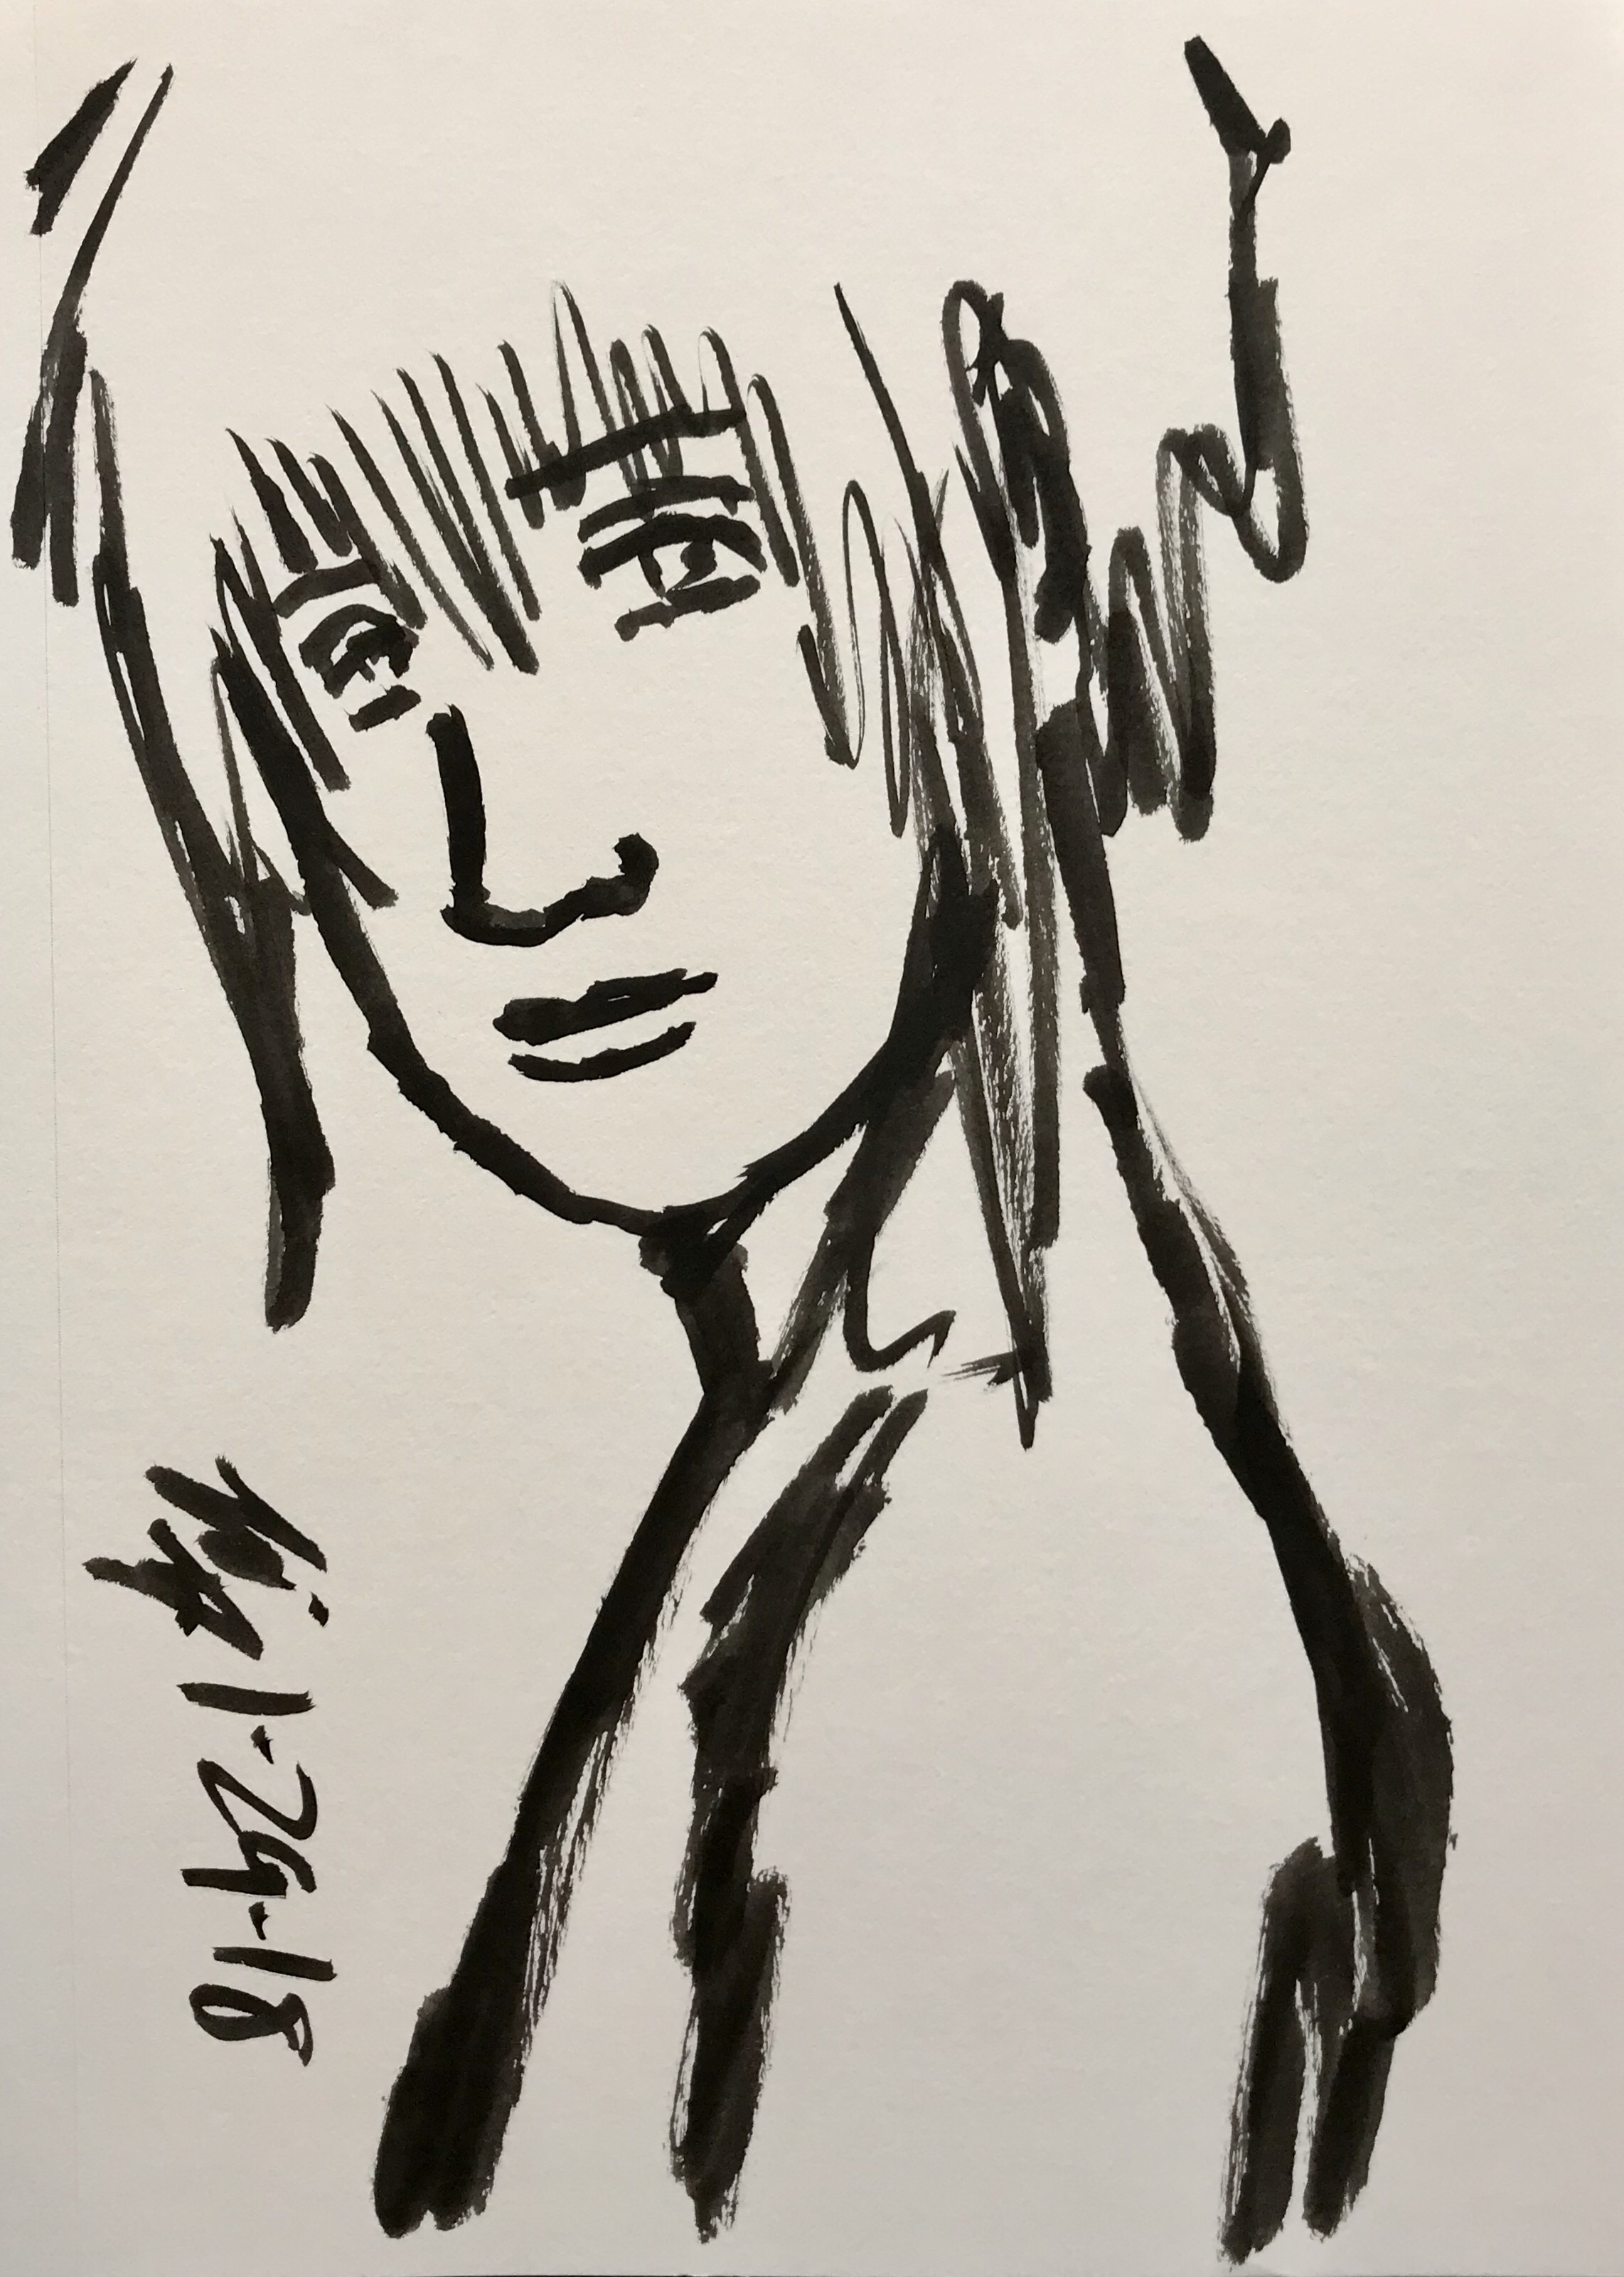 20180129-02 - Ink brush pen - character portrait by ArtCresc on DeviantArt